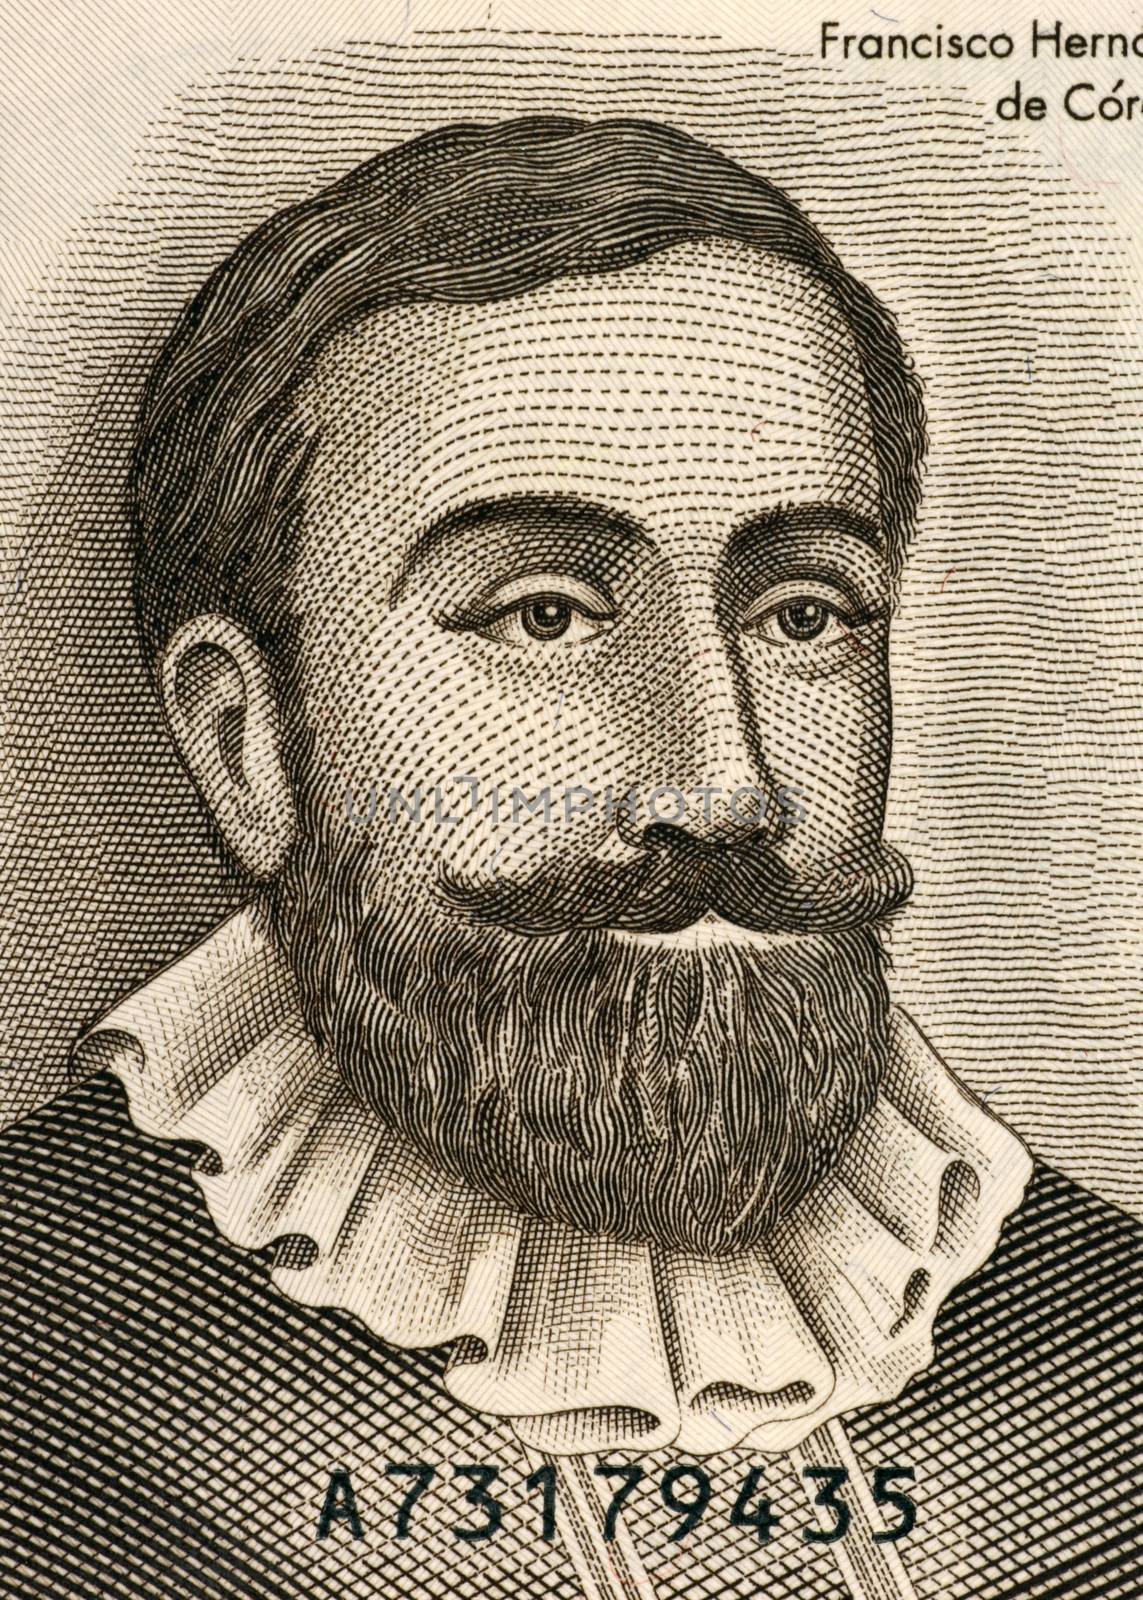 Francisco Hernandez de Cordob by Georgios